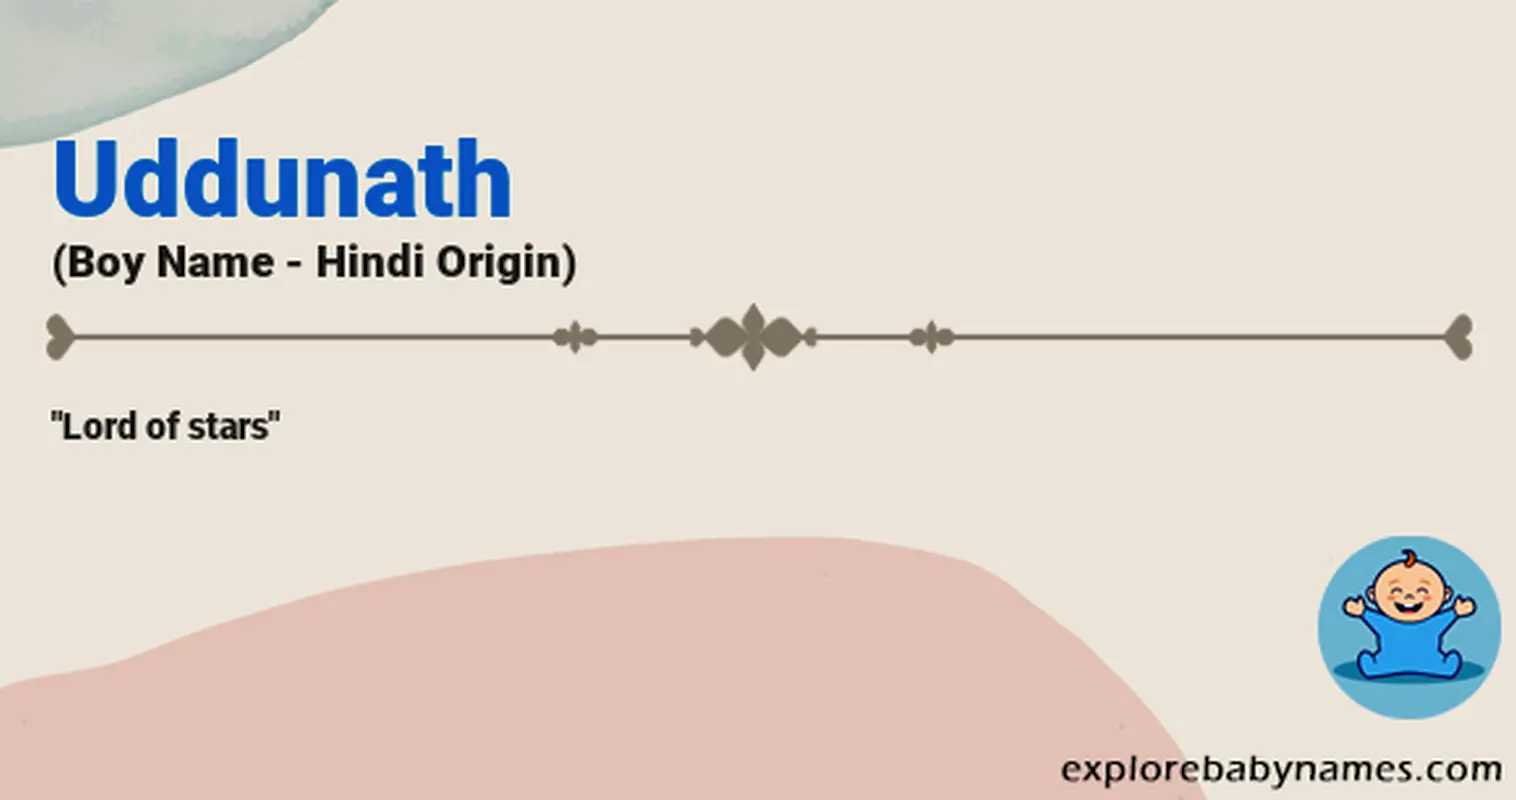 Meaning of Uddunath